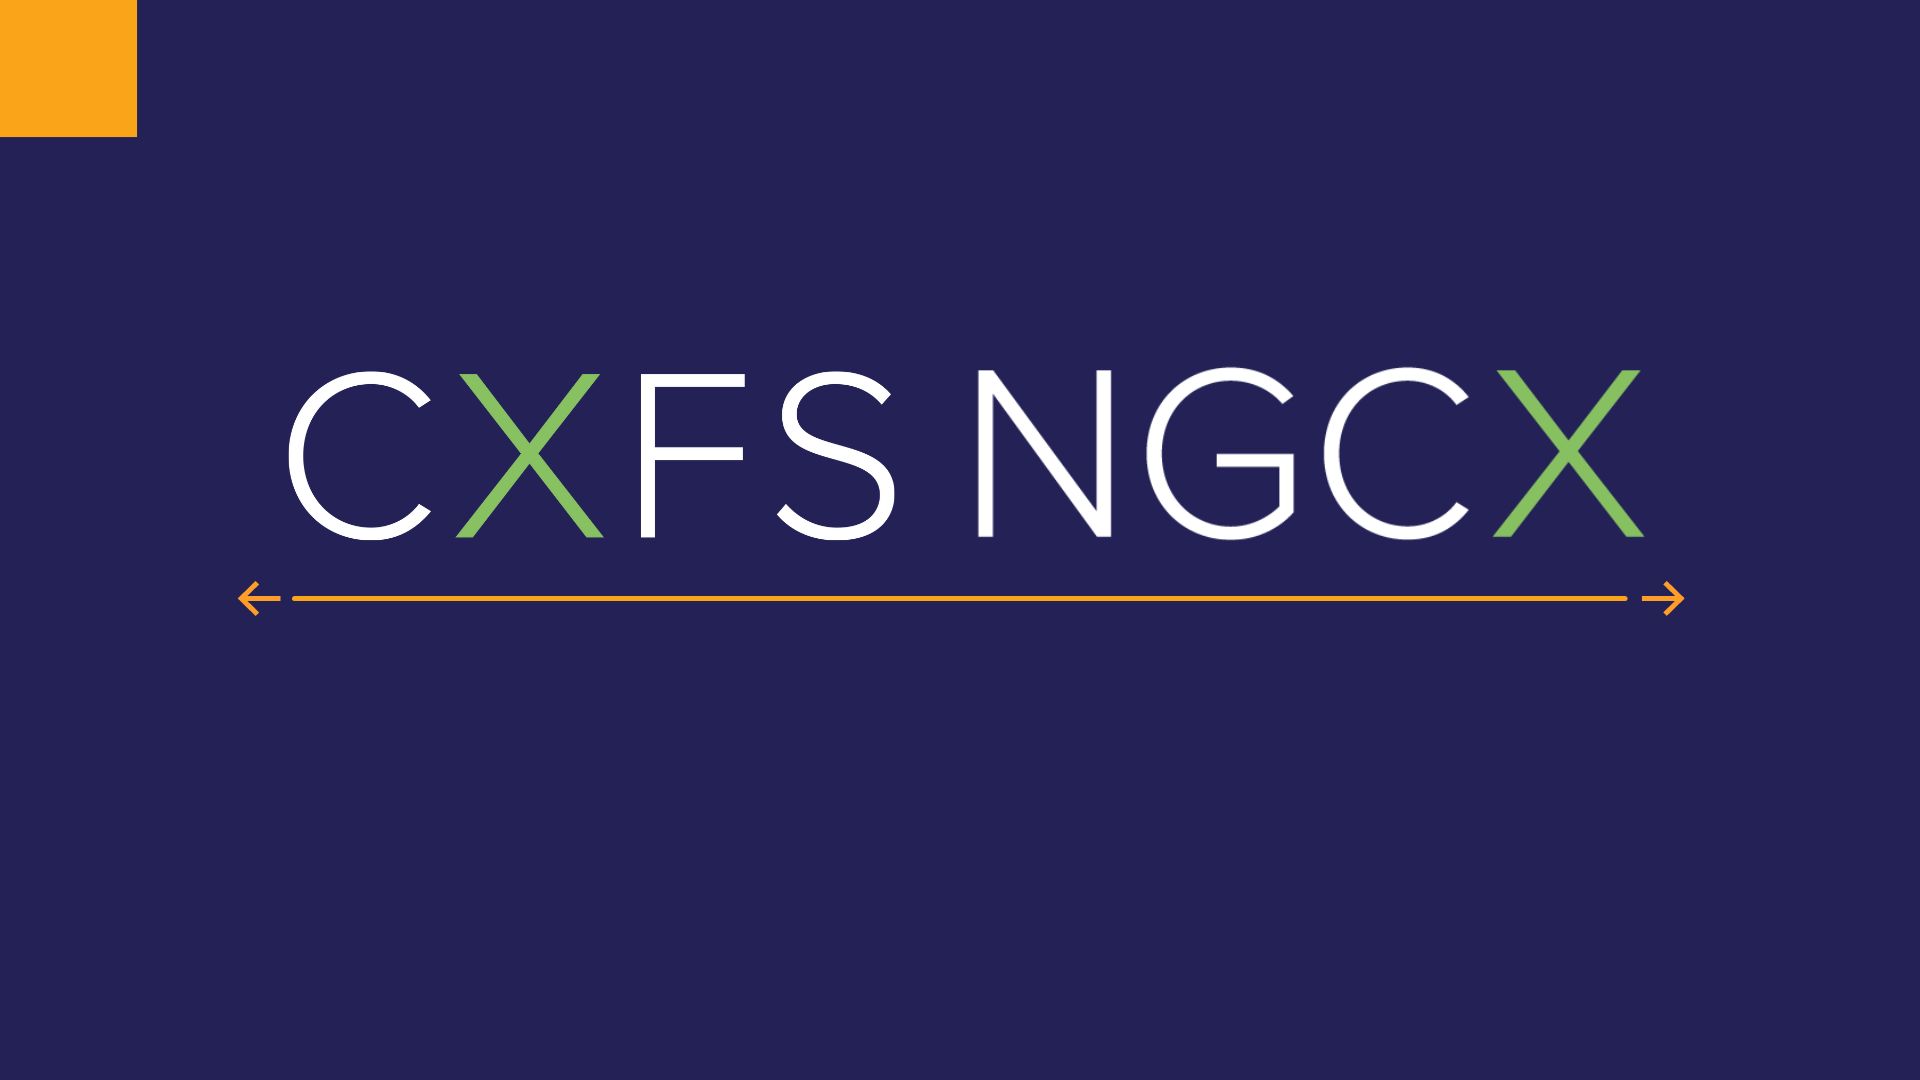 CXFS & NGCX 2023, Suffolk, Massachusetts, United States